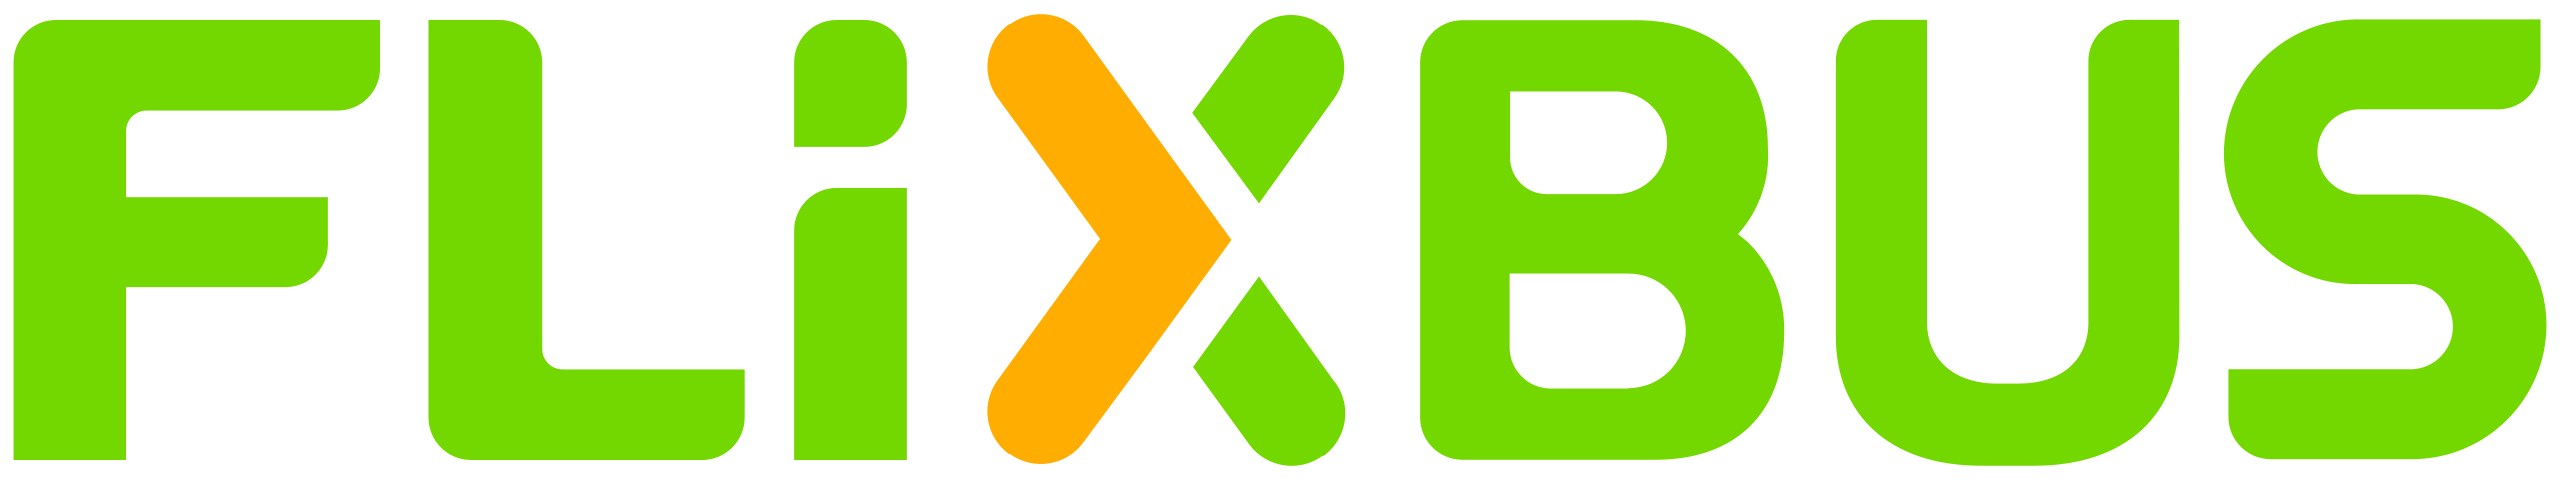 2560px-Flixbus_201x_logo.svg